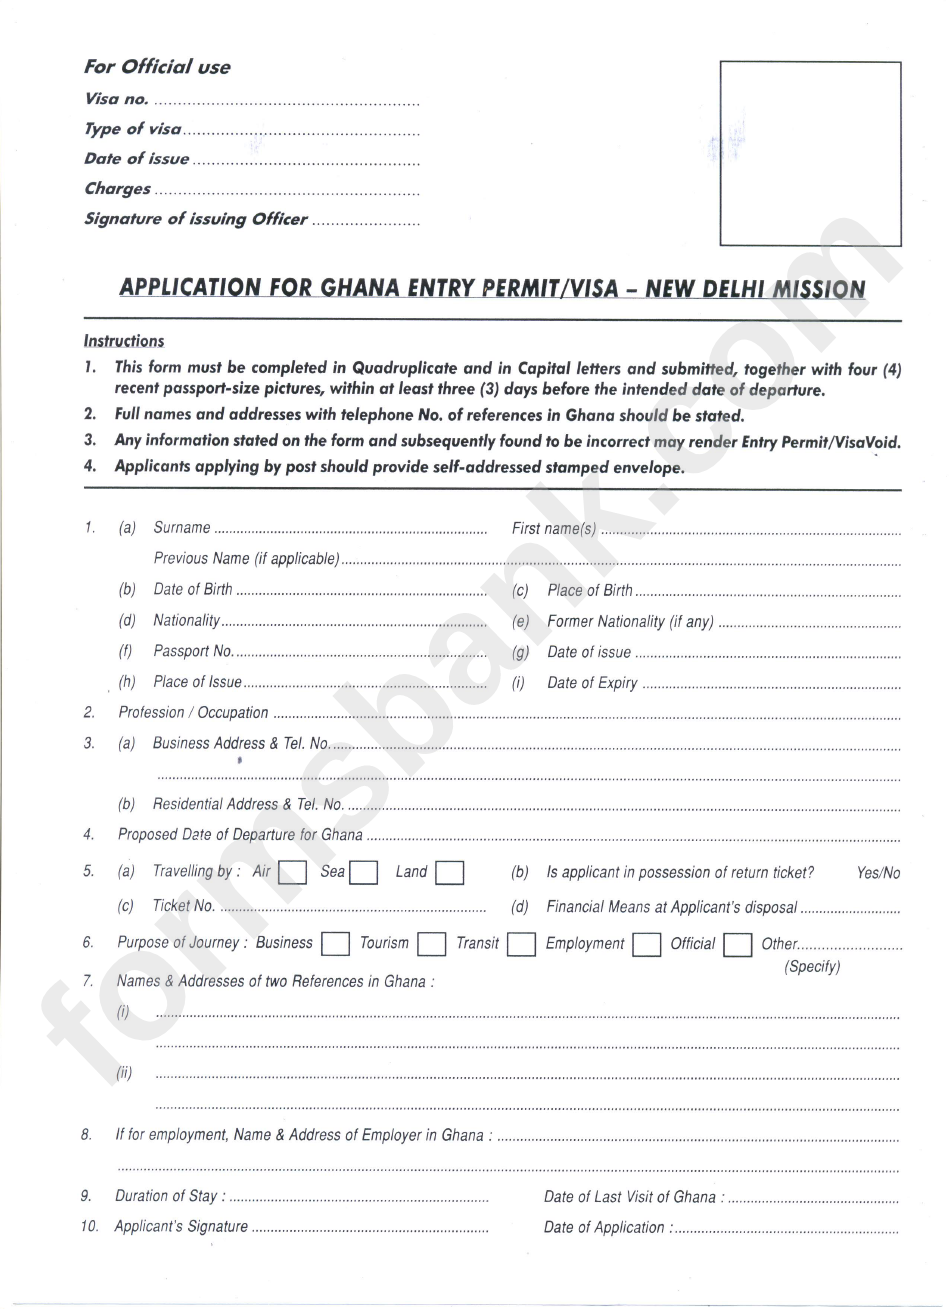 Application For Ghana Entry Permit/visa - New Delhi Mission